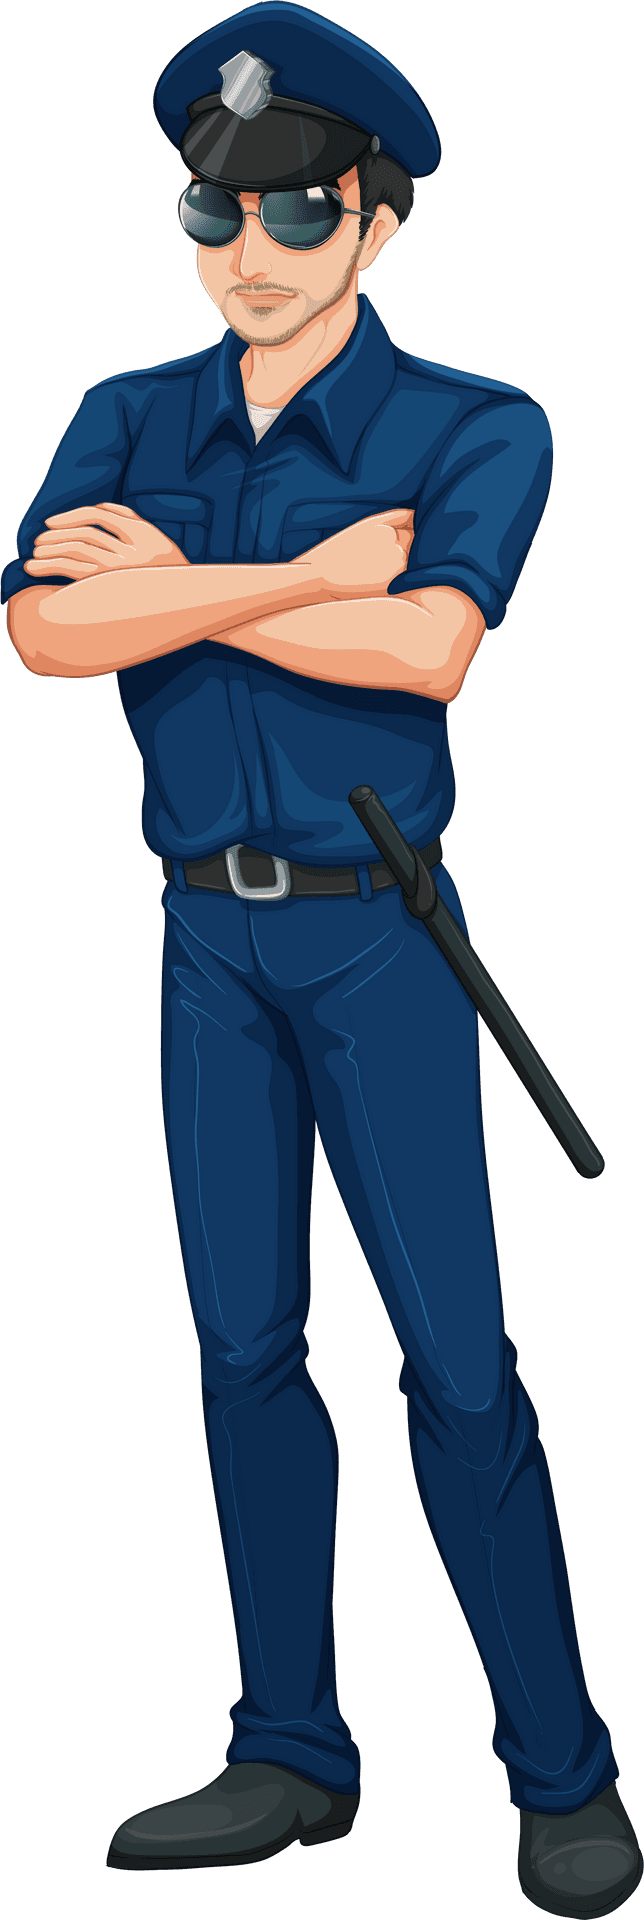 Confident Policeman Illustration PNG image